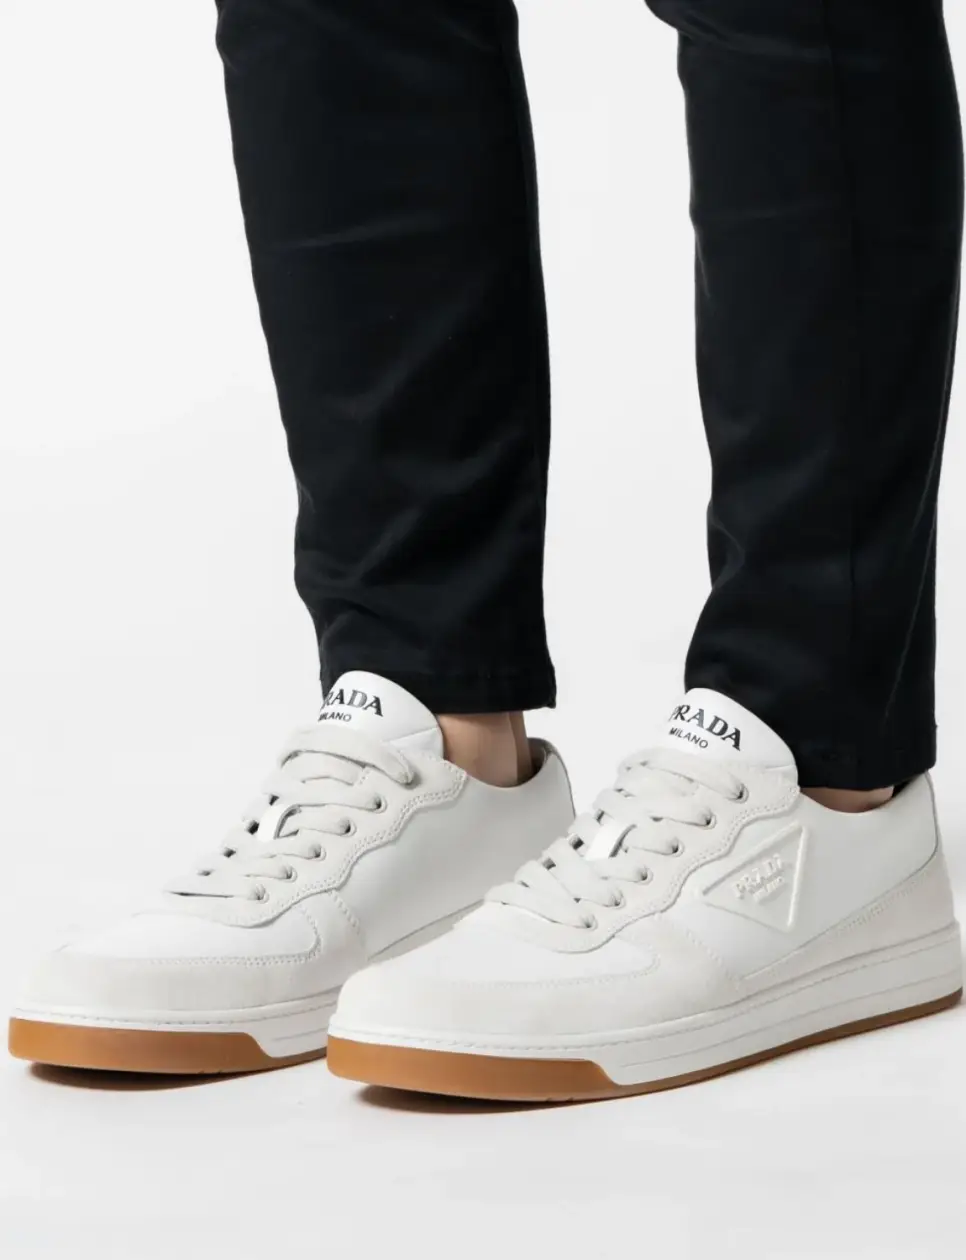 Prada Rubber Logo Low-Top Sneakers Suede White Grey